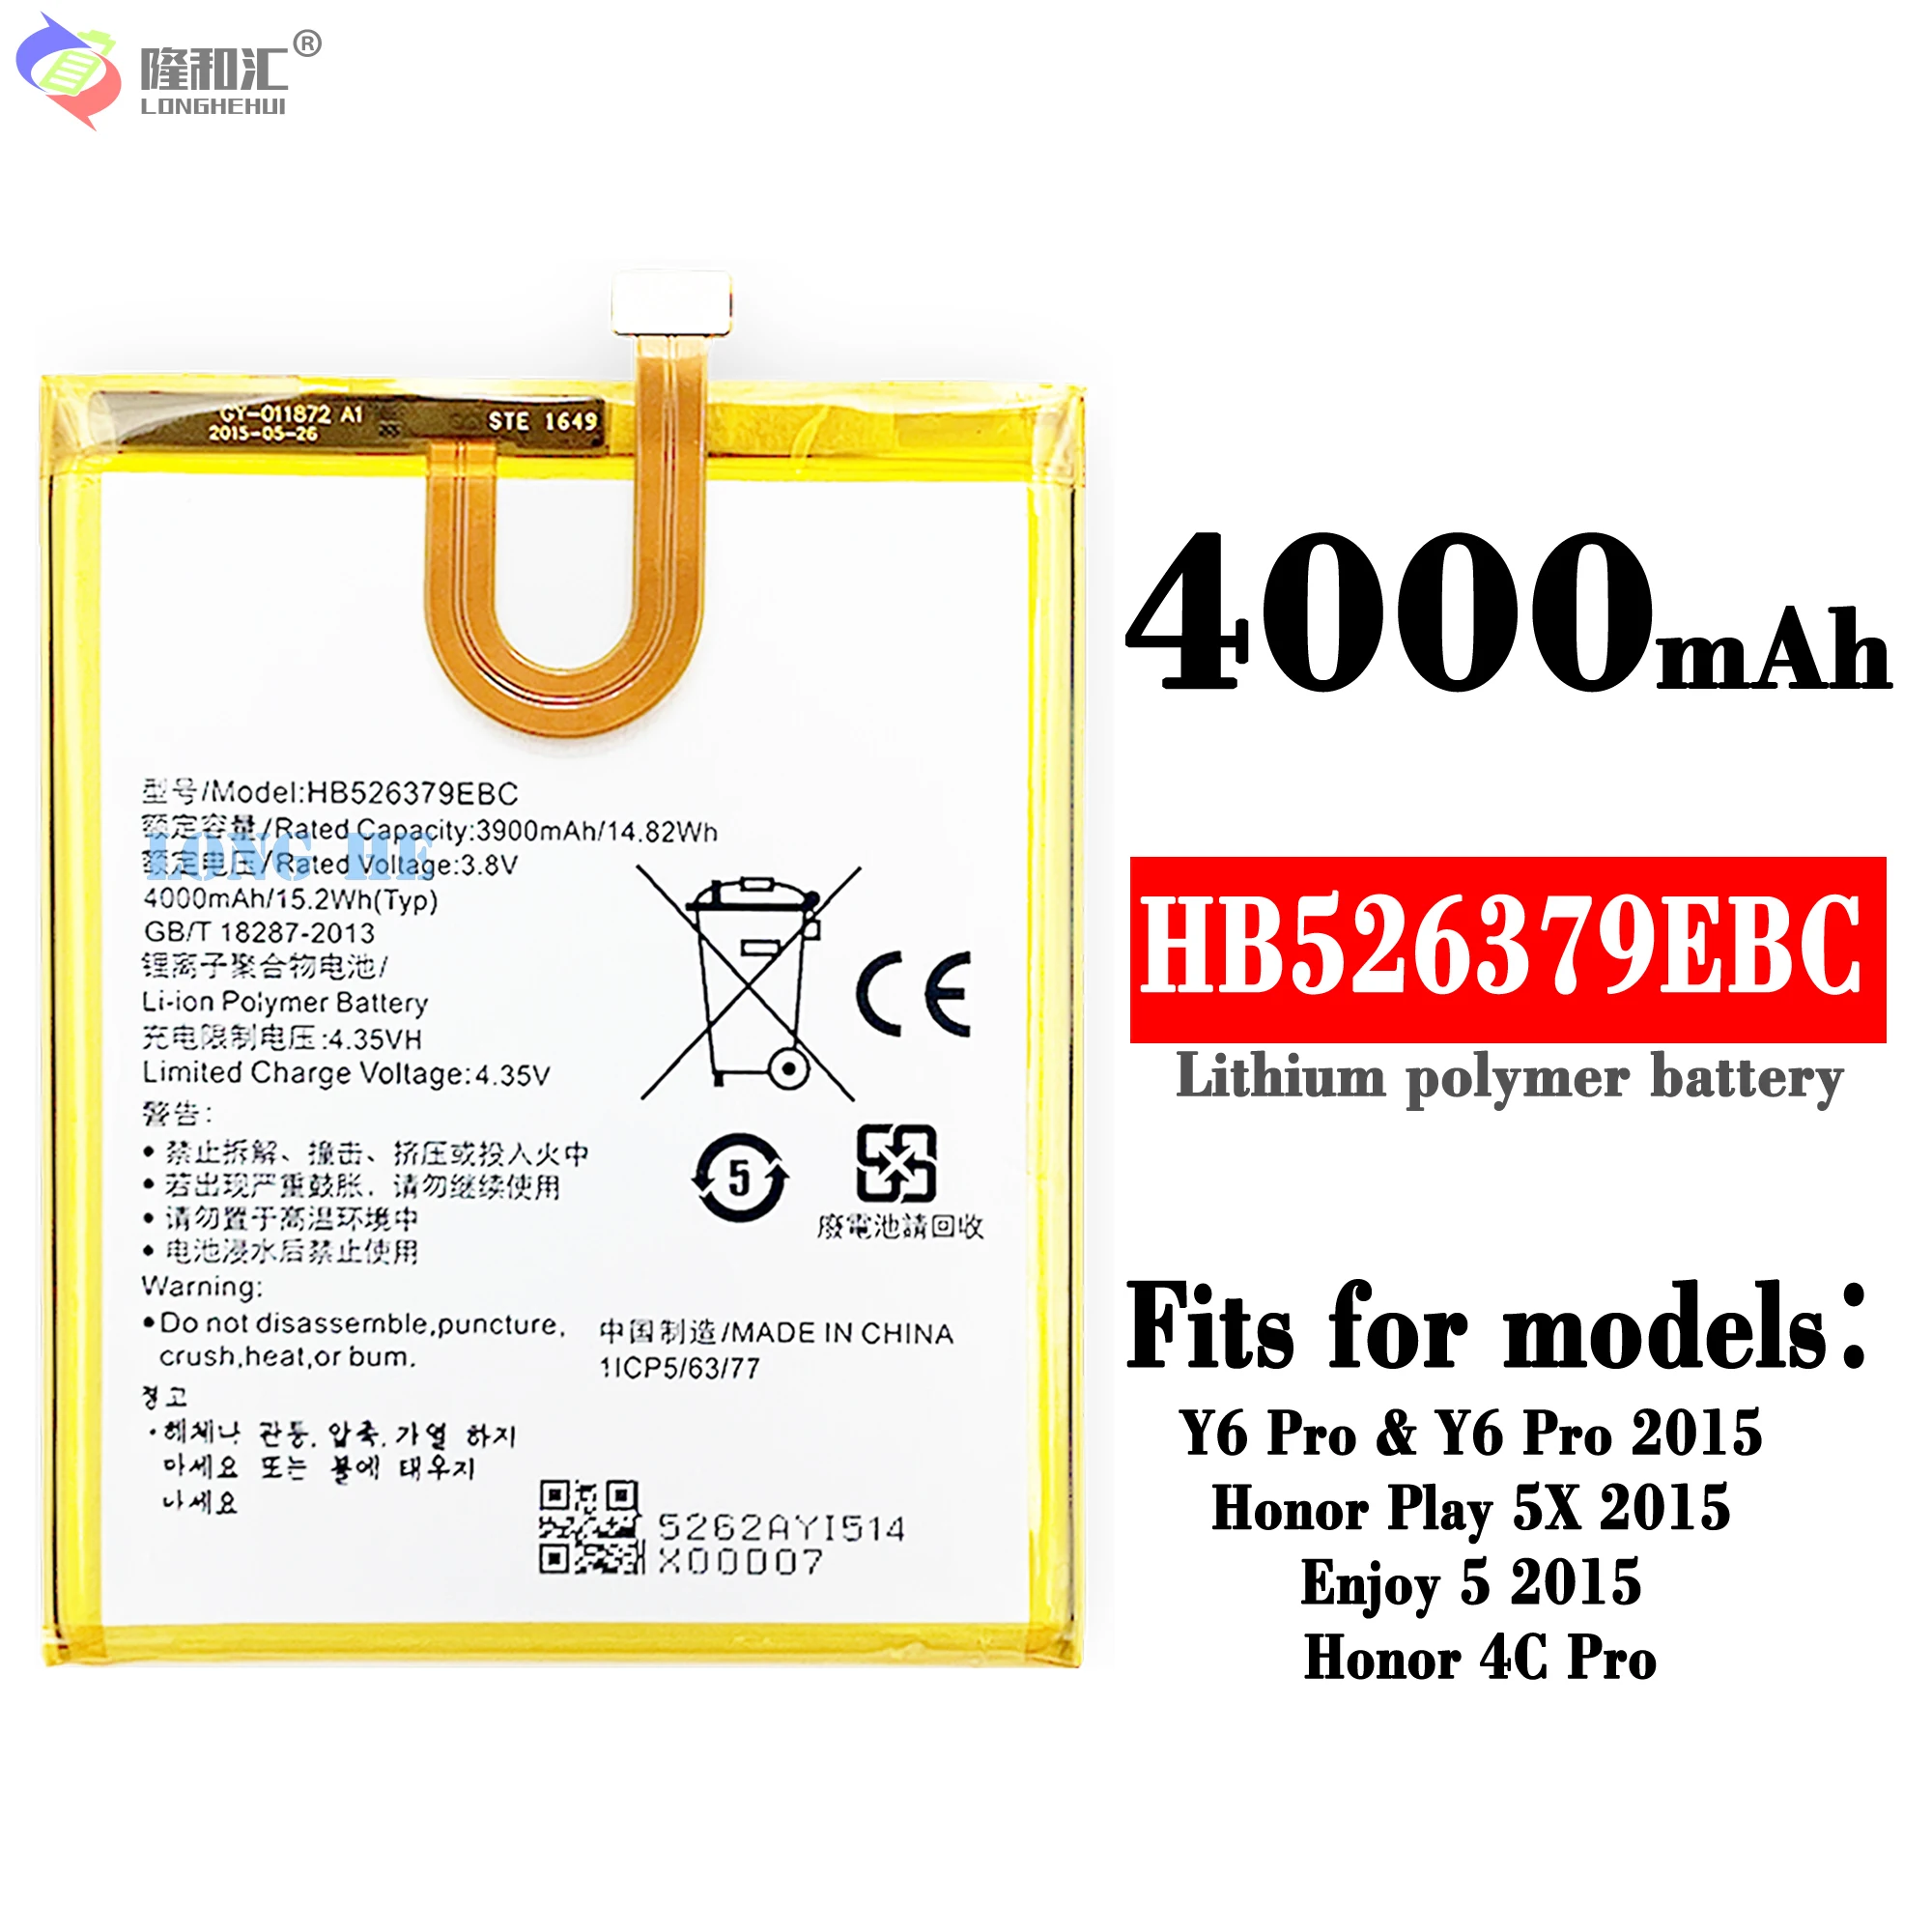 

New Original HB526379EBC 4000mAh Battery For Huawei Honor 4C Pro Y6 Pro Honor Play 5X Holly 2 plus TIT-AL00 CL10 TIT-L01 TIT-U02